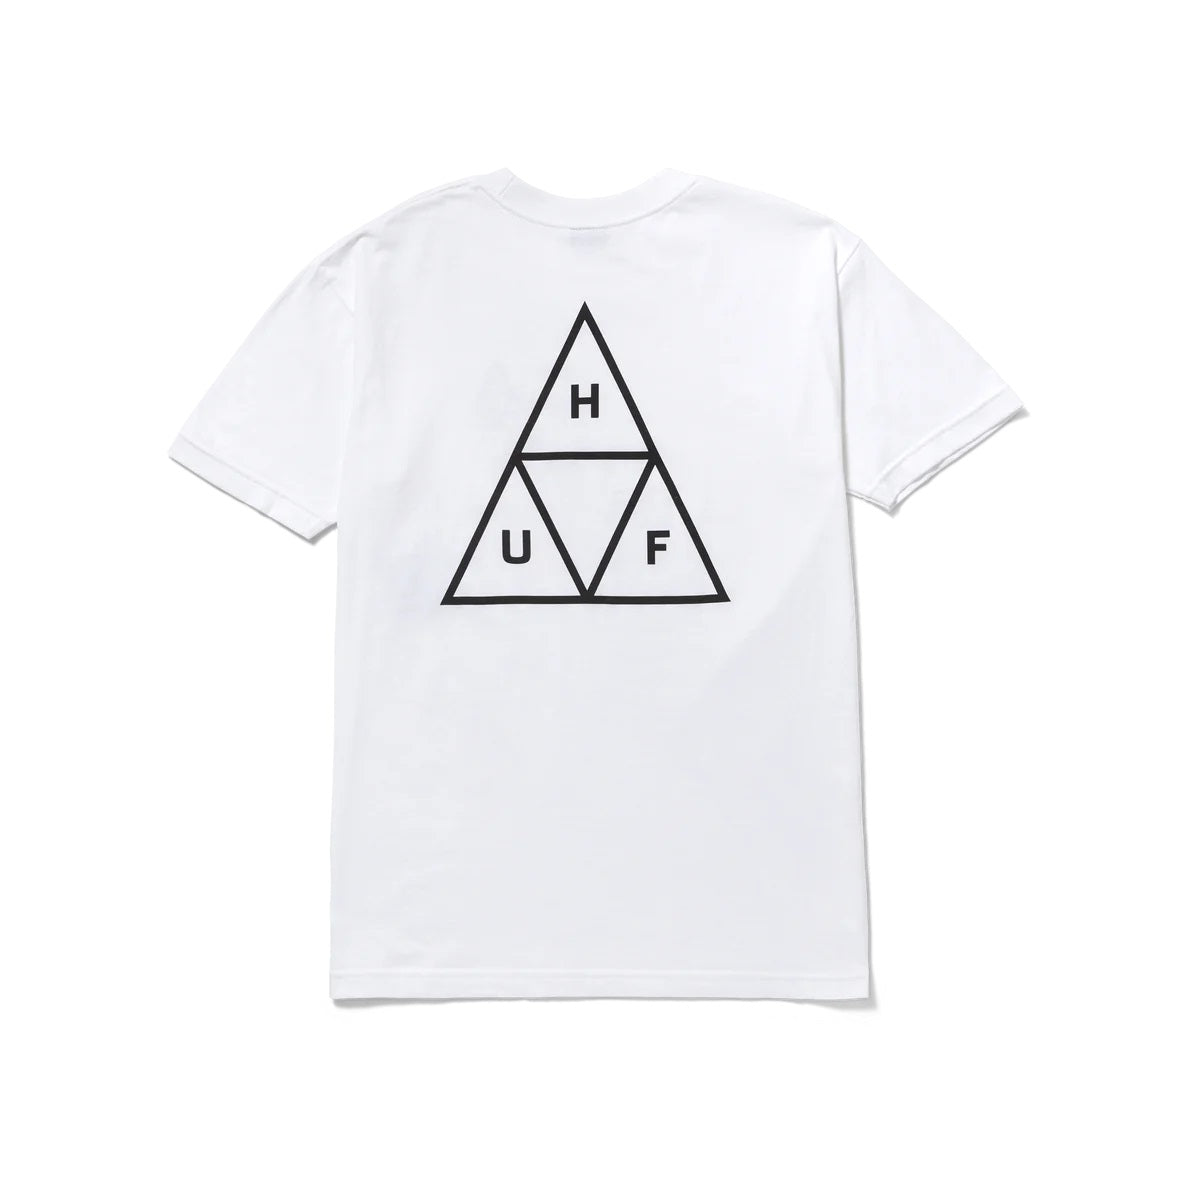 Huf Huf Set Triangle Tee White T-Shirt